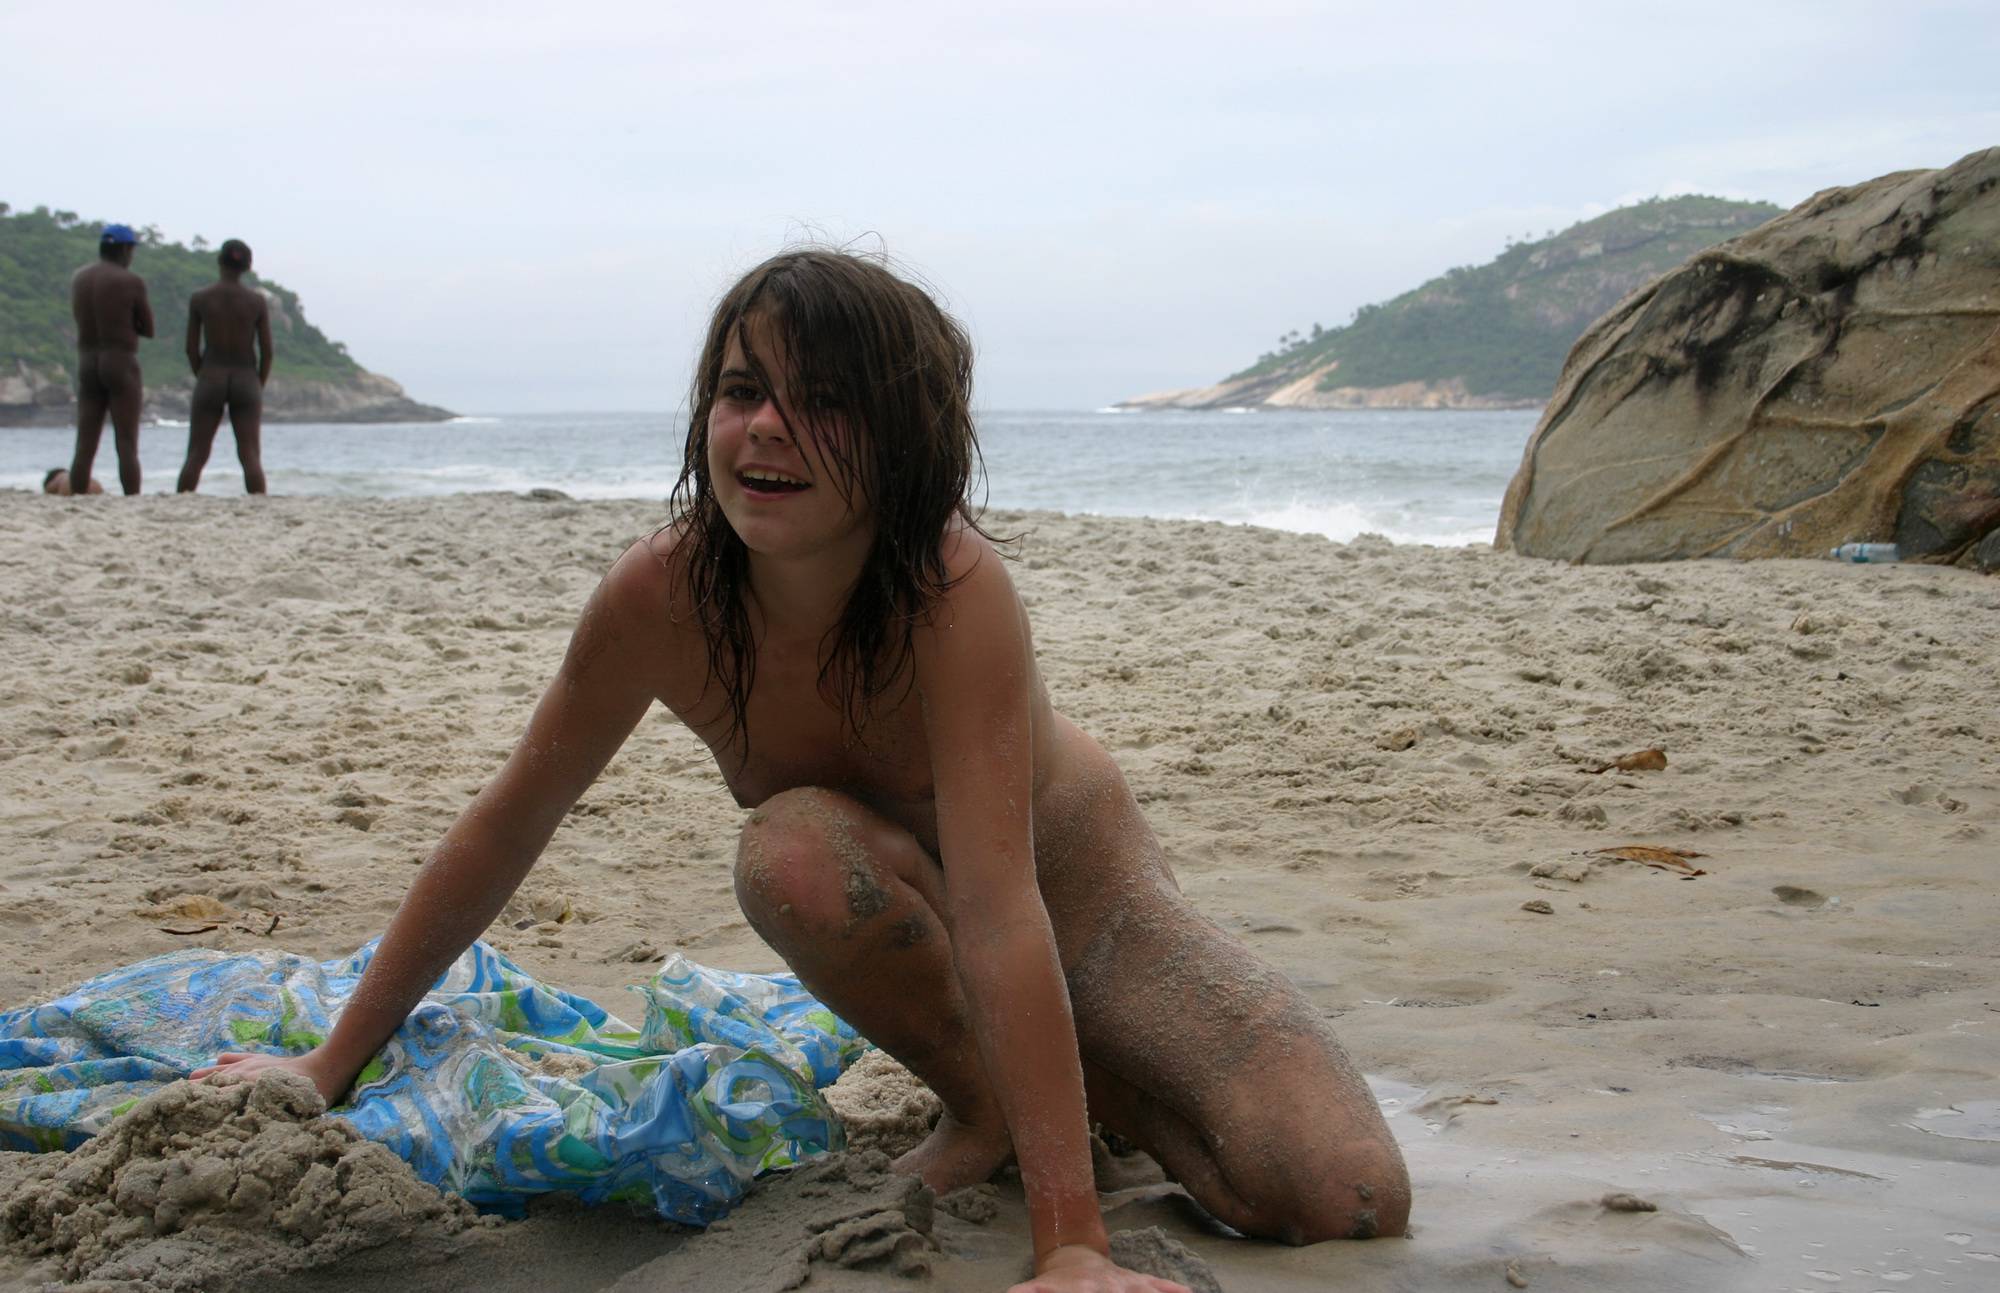 Purenudism Images-Brazilian Beach Relaxation - 1